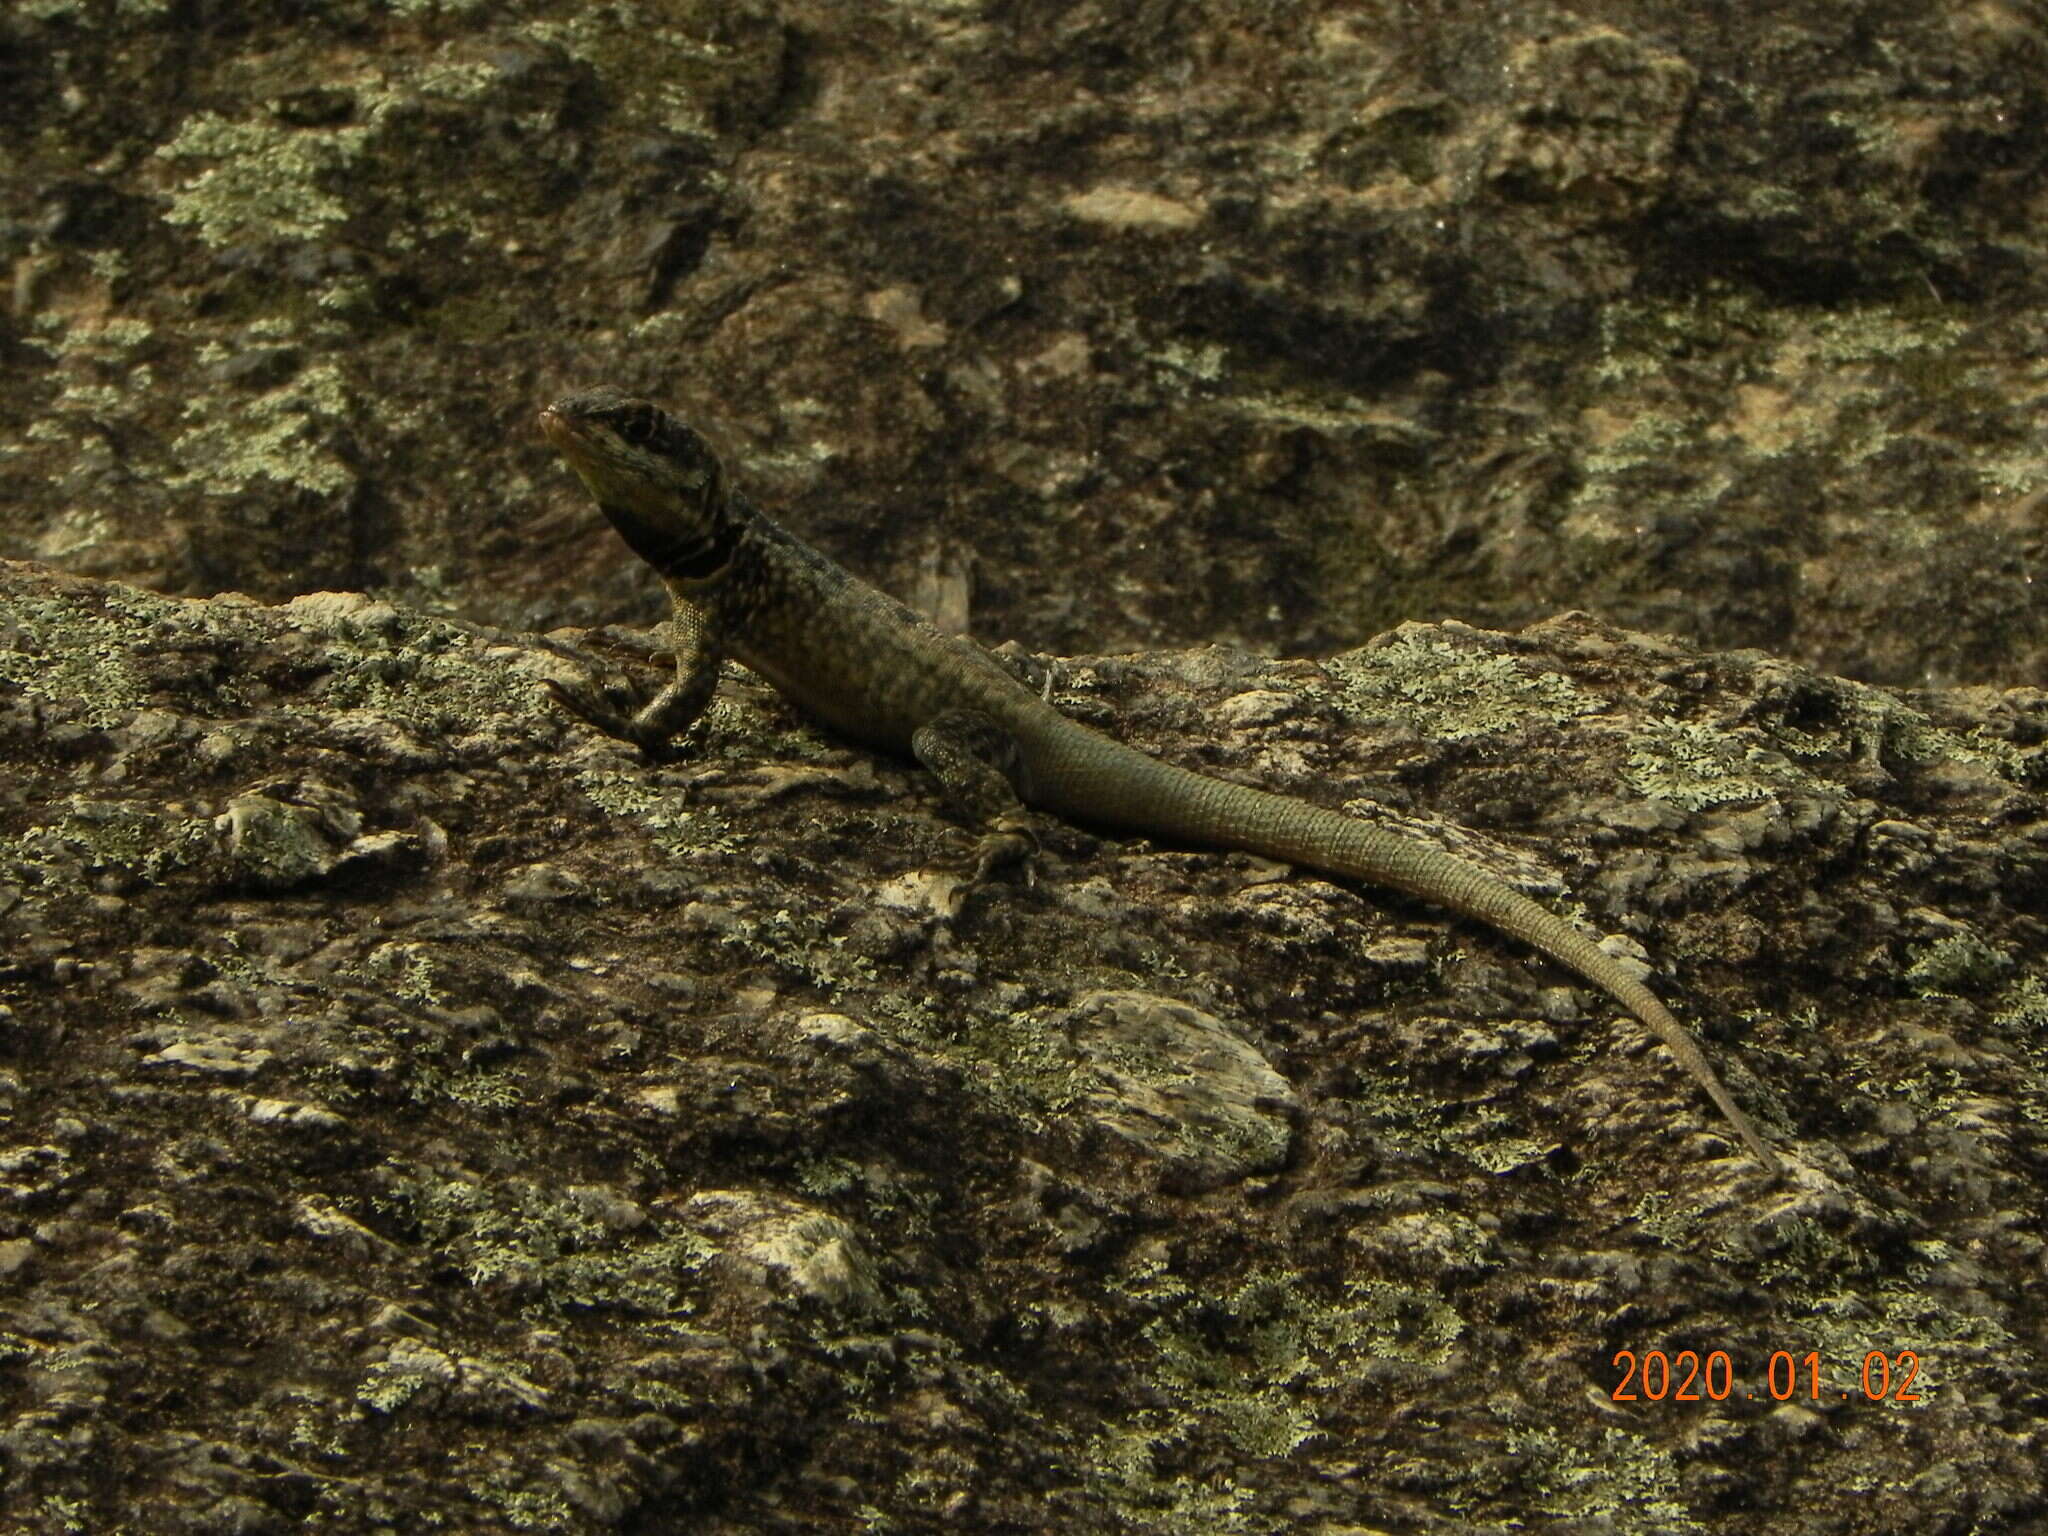 Image of Amazon Lava Lizard